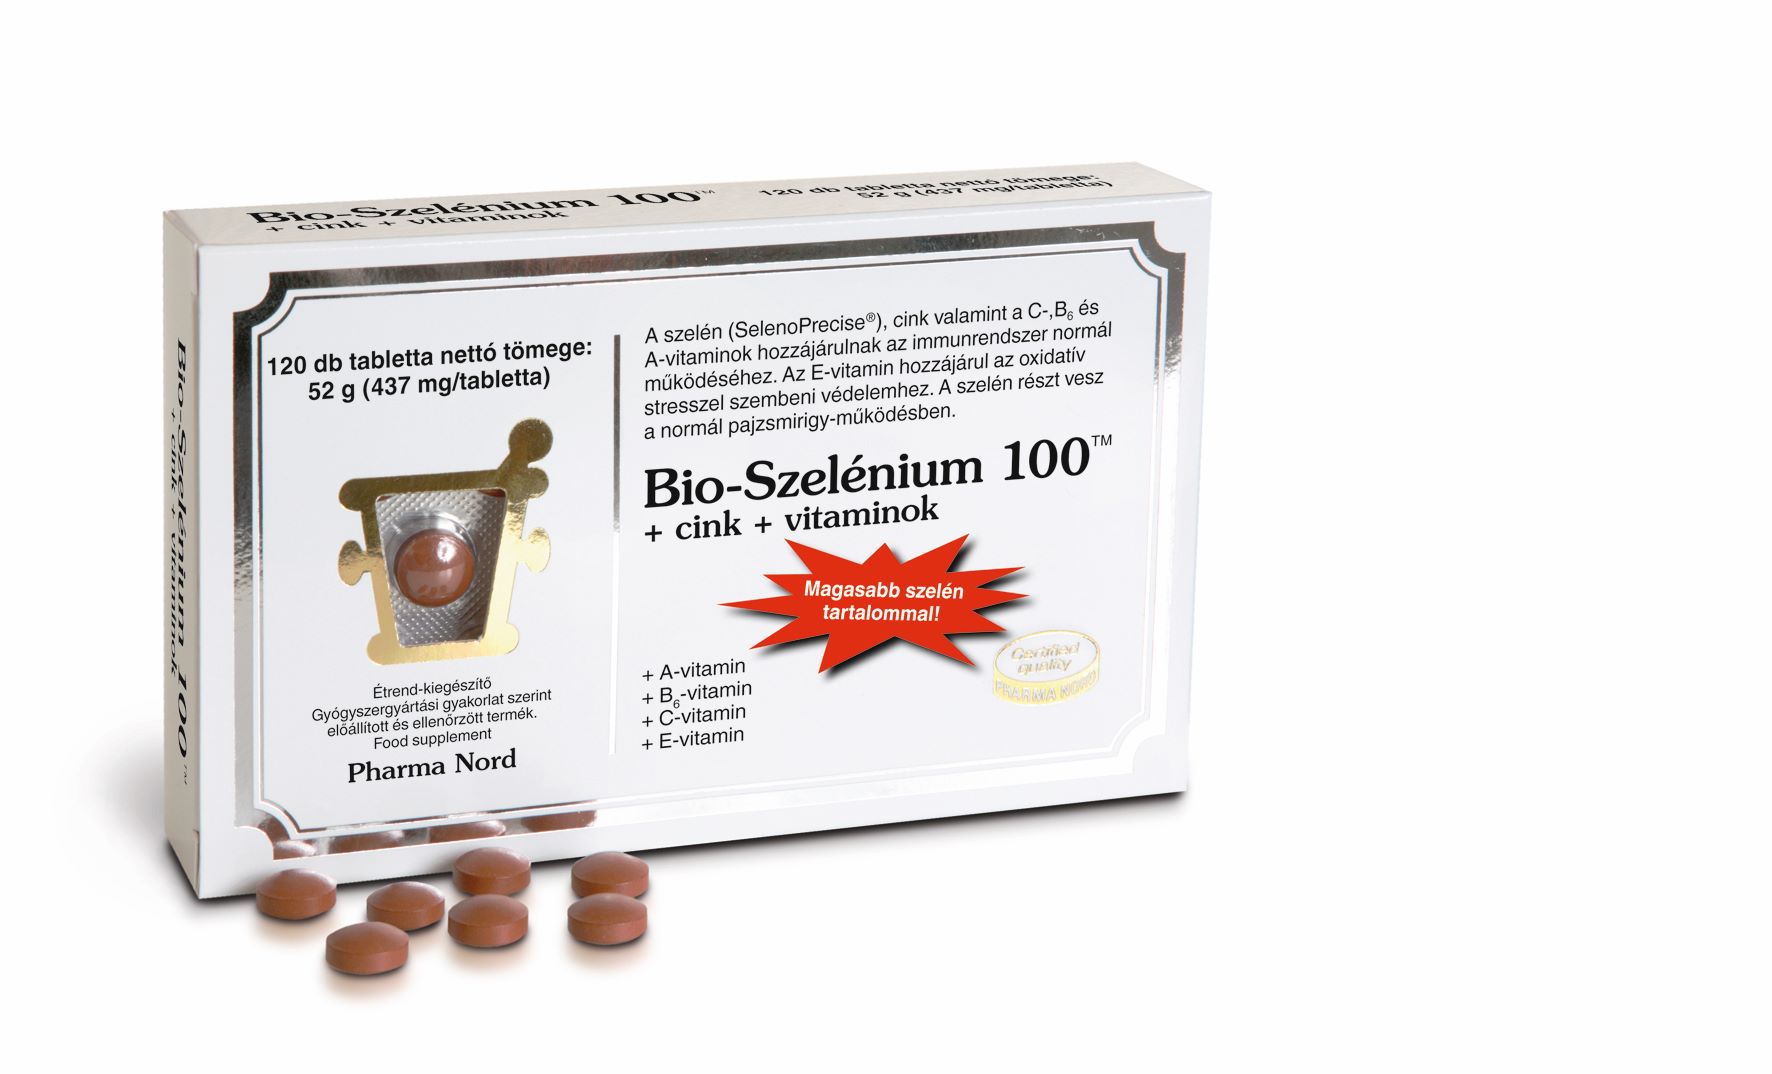 Bio - Szelénium 100 + Cink + vitaminok tabletta Pharma Nord